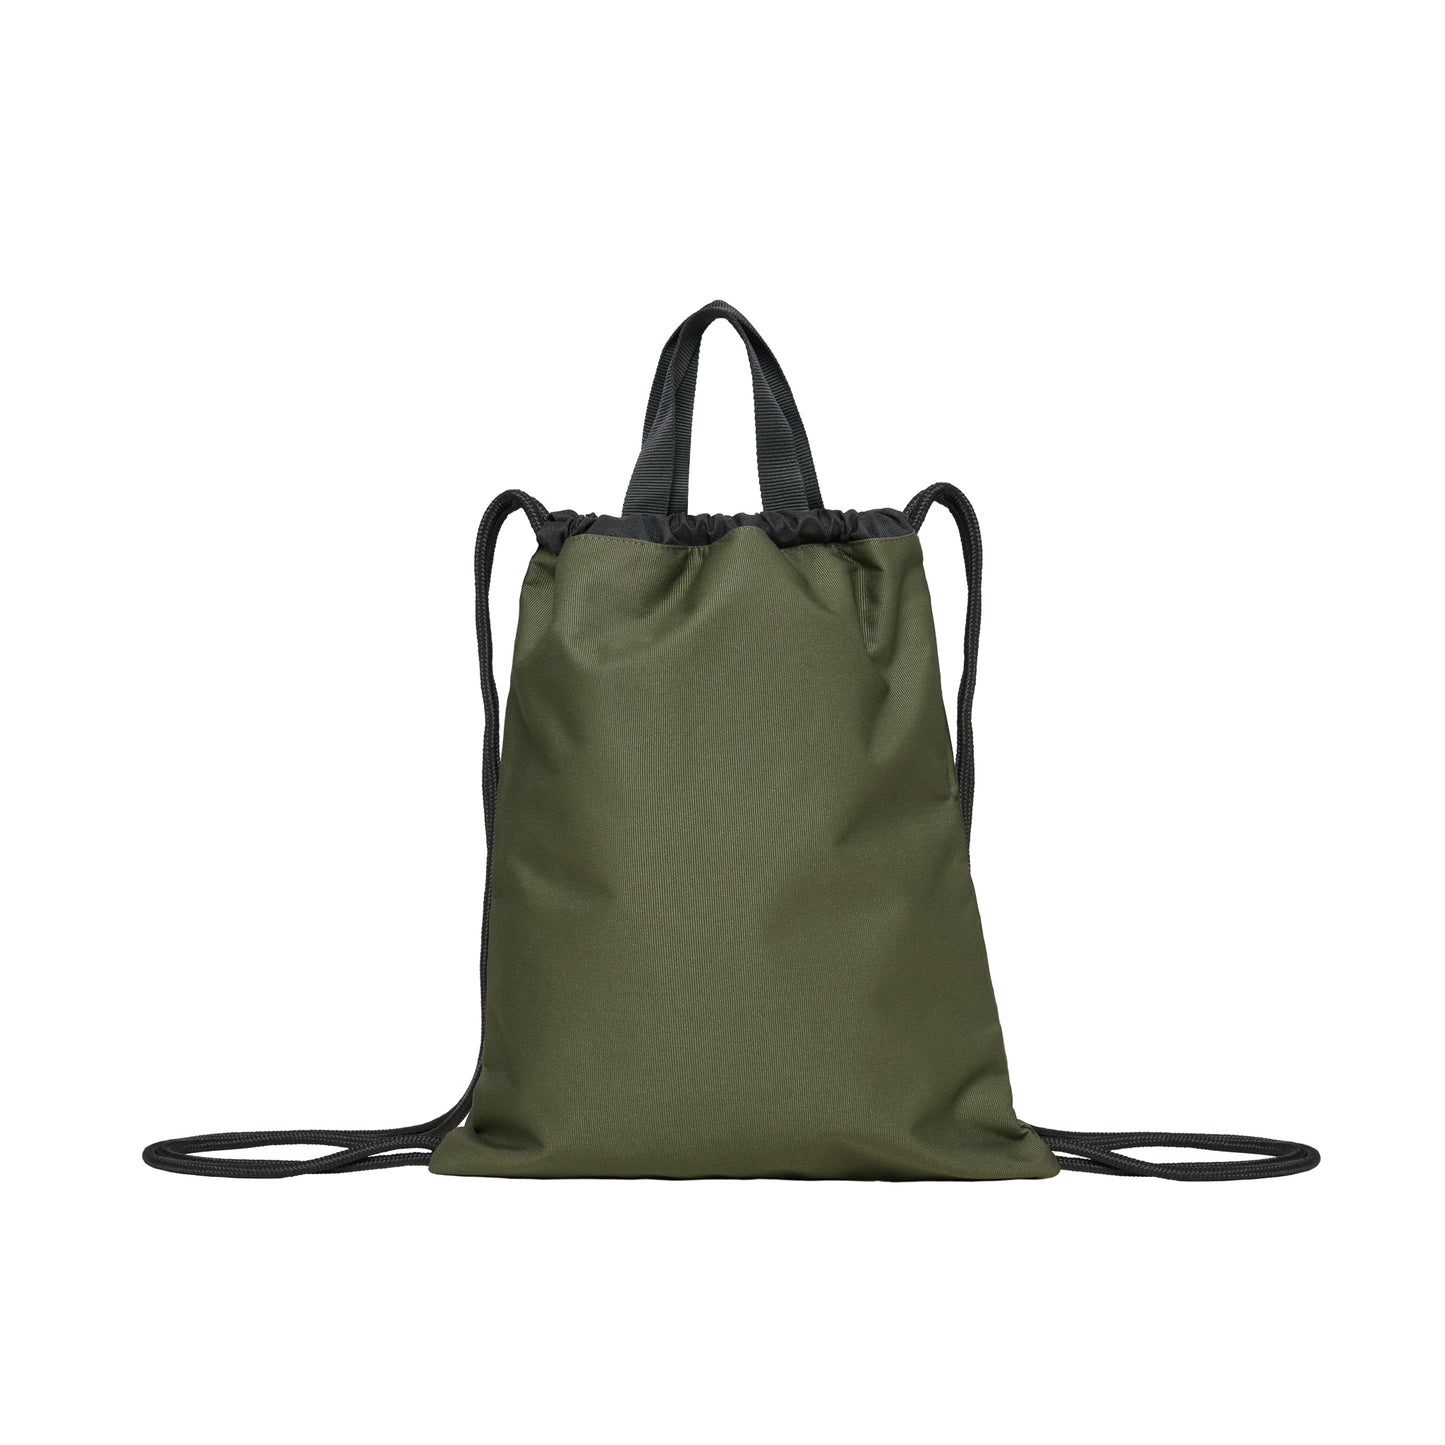 02-DRAWSTRING BAG Army Green